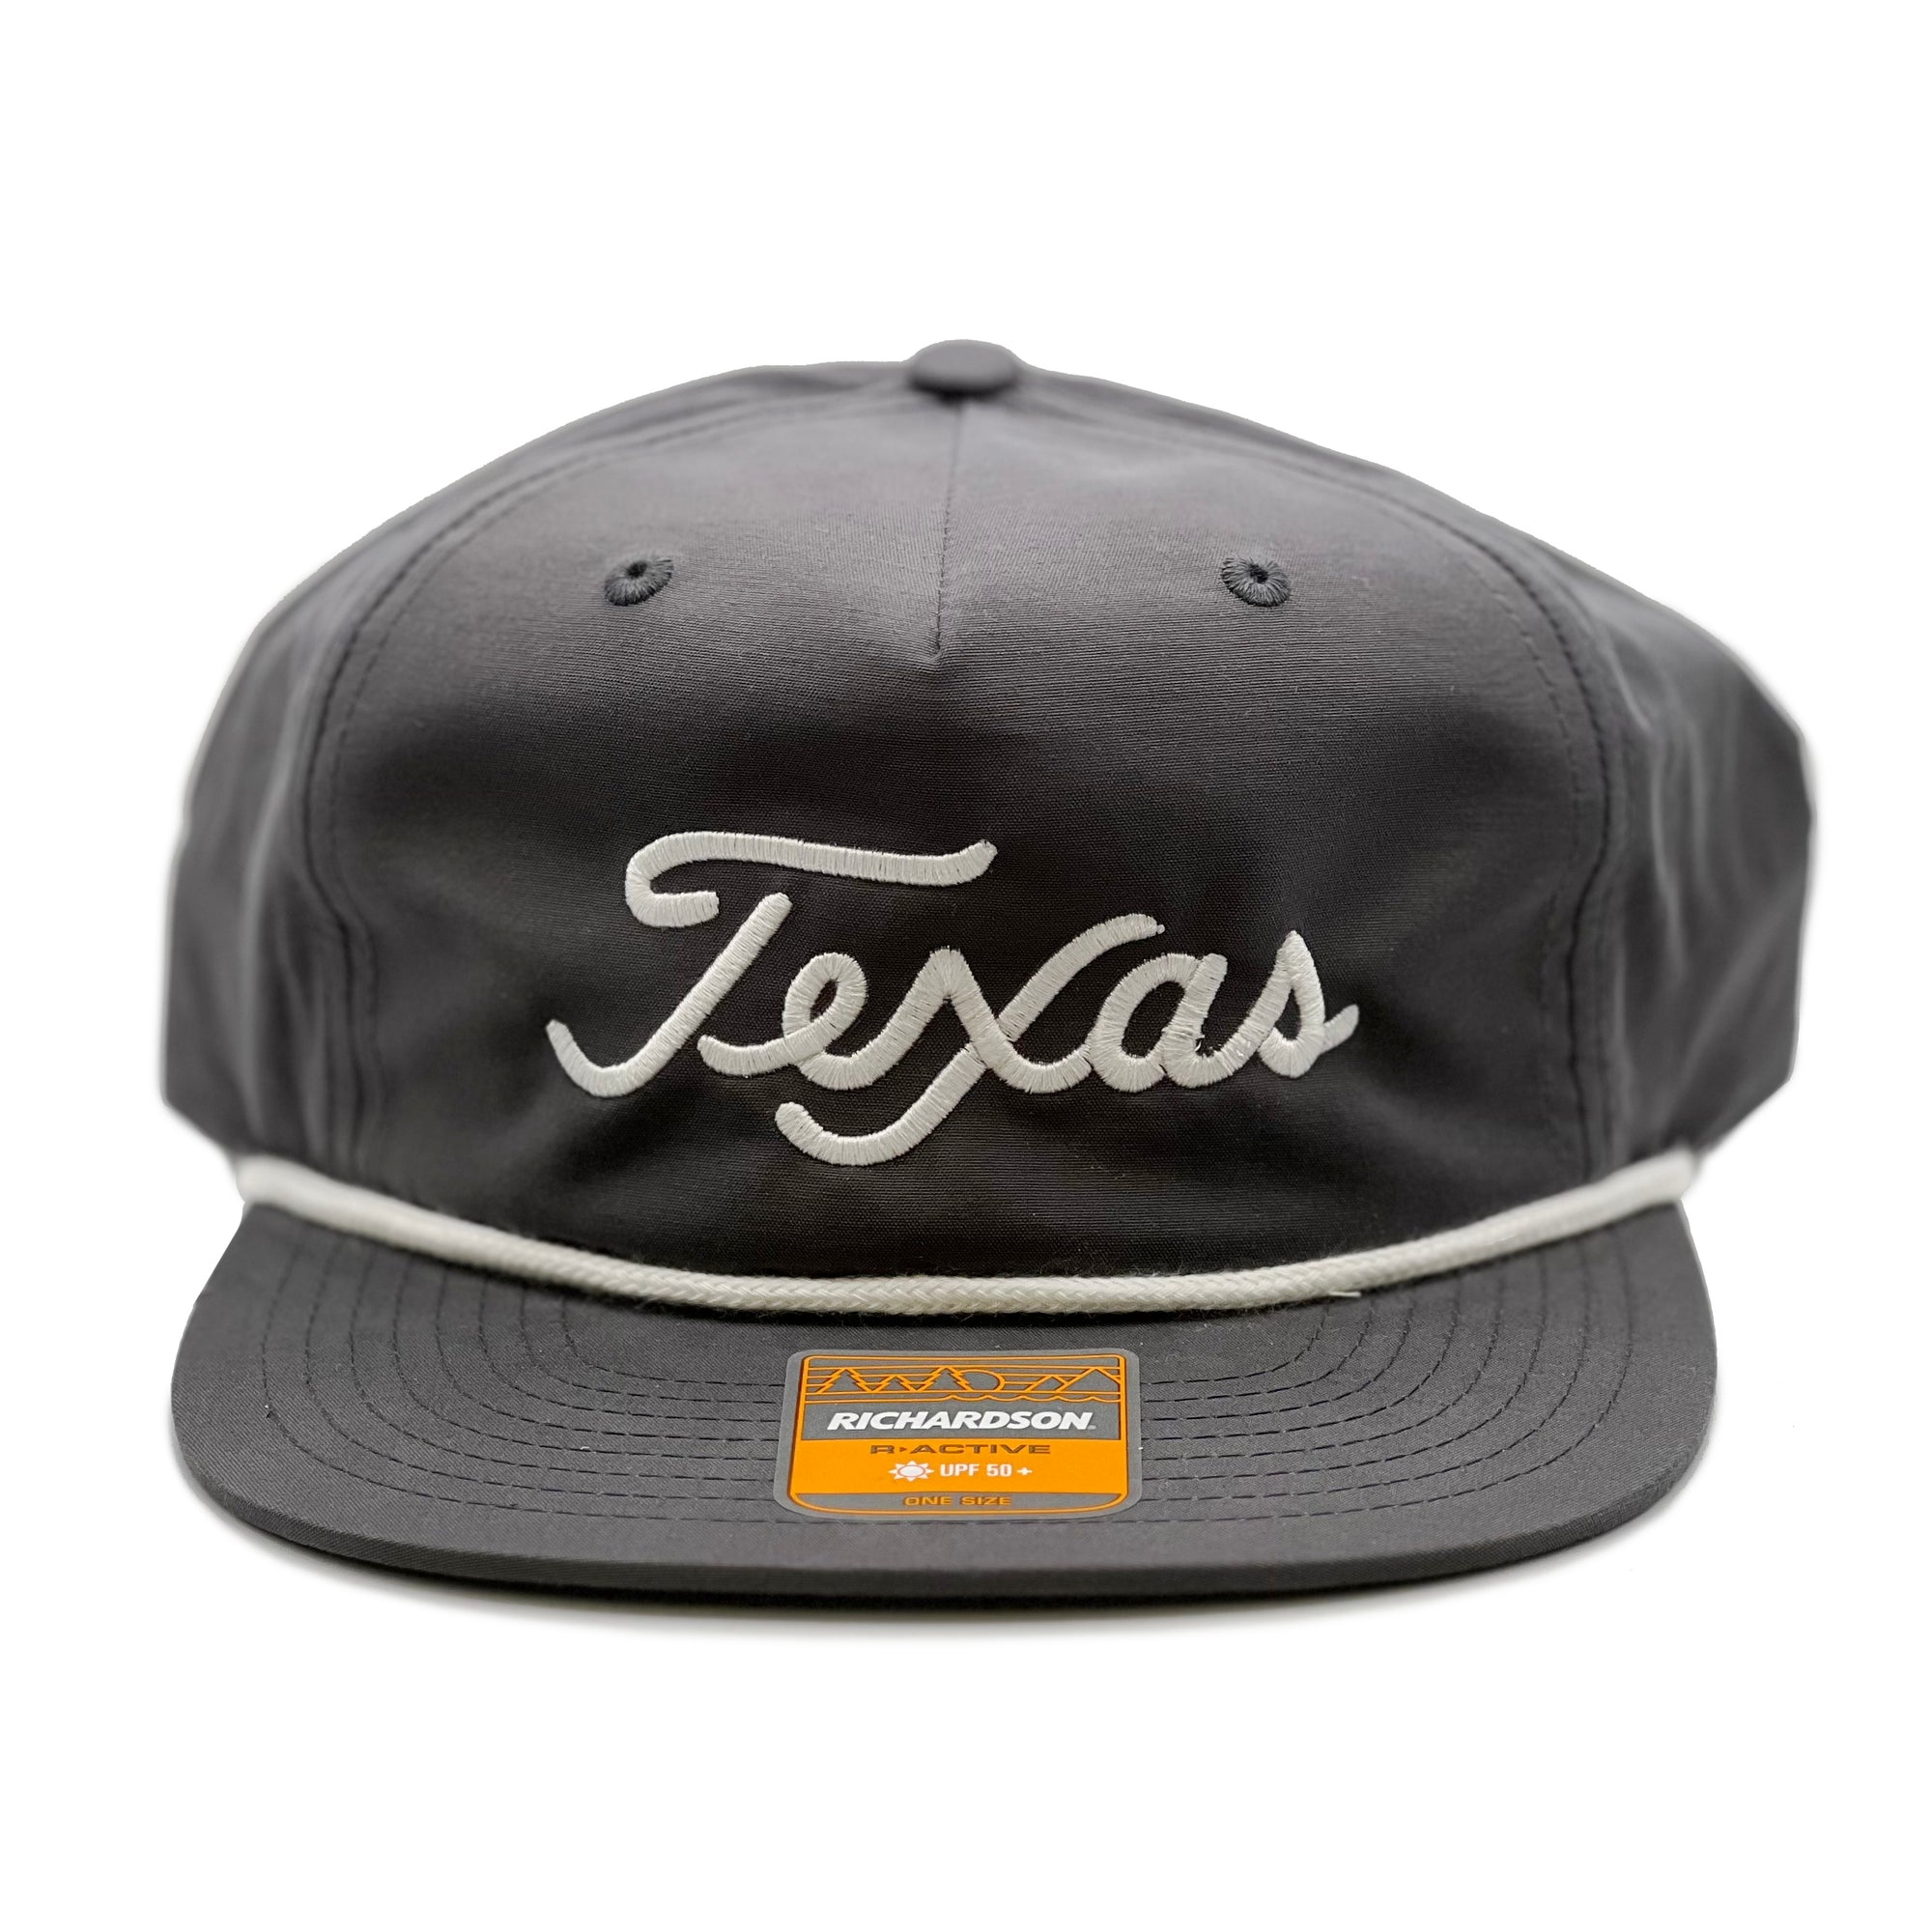 Script Texas Hat (Charcoal/White)